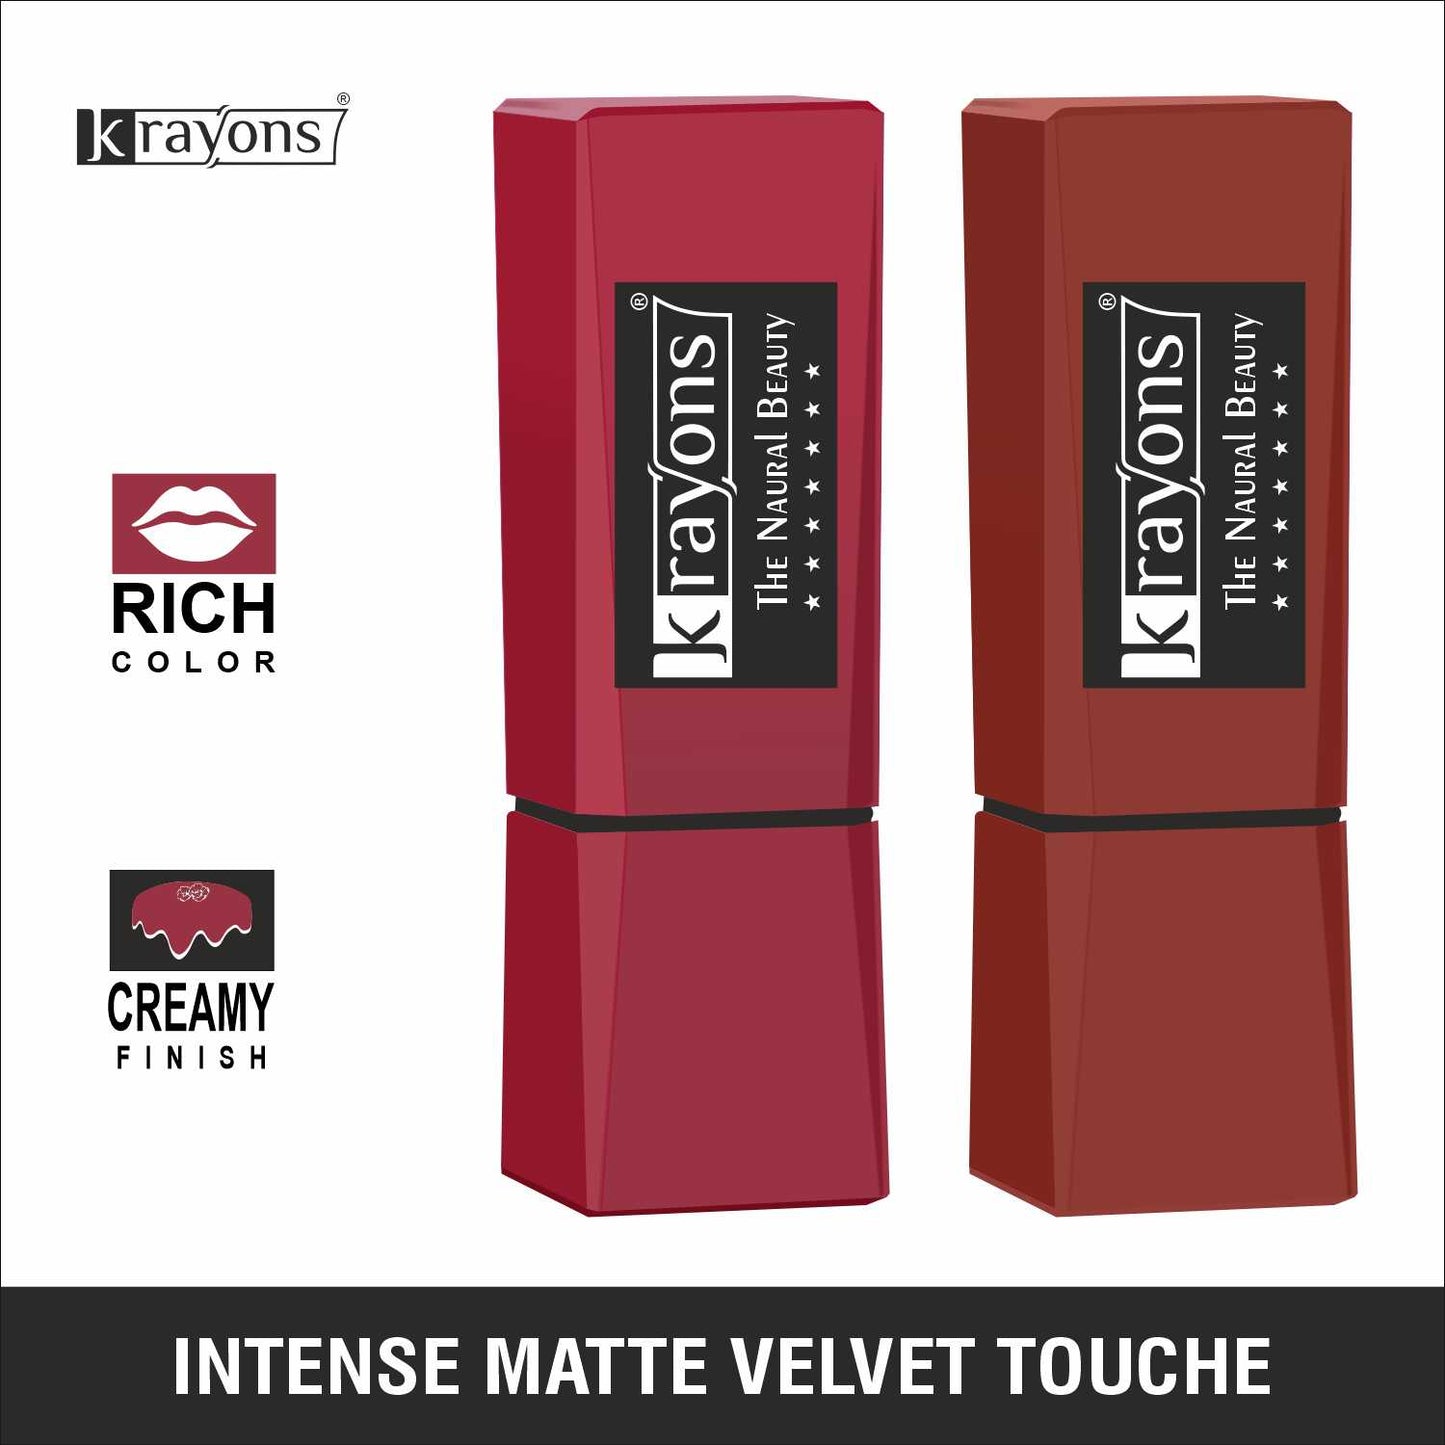 Krayons Intense Matte Lipstick, Waterproof, Longlasting, Scarlet Red, Chocolate Caramel, 3.5gm Each (Pack of 2)